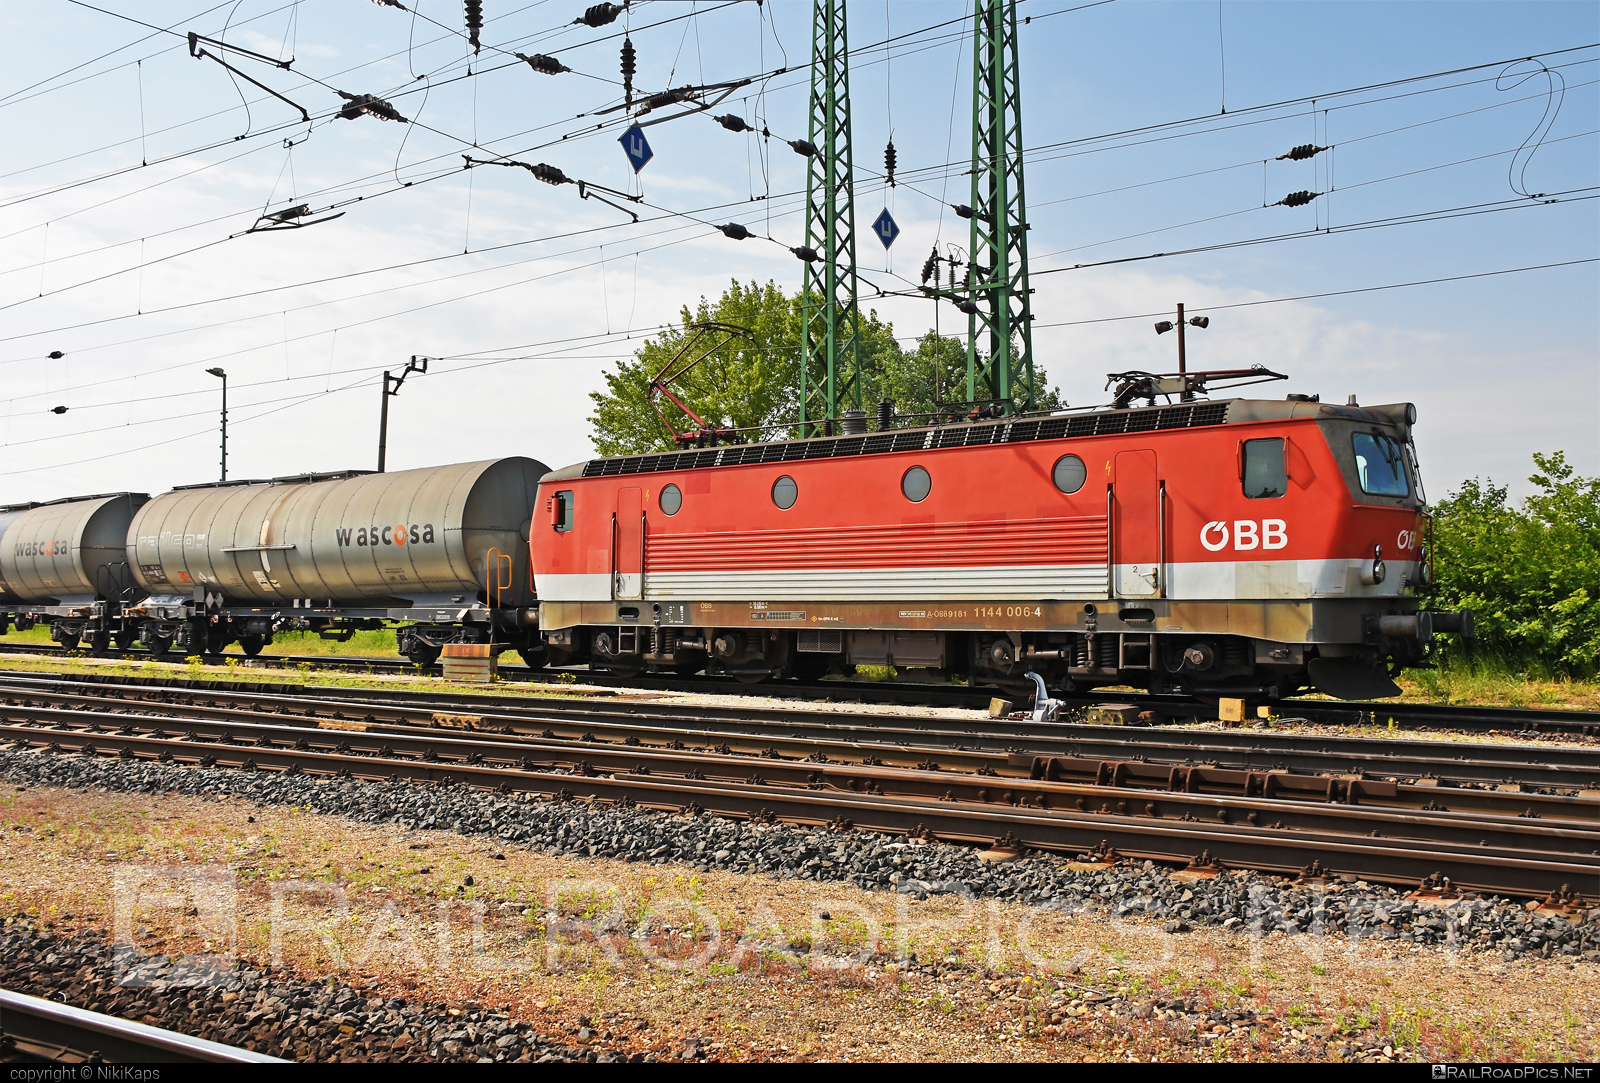 SGP 1144 - 1144 006 operated by Rail Cargo Austria AG #kesselwagen #obb #obb1144 #obbClass1144 #osterreichischebundesbahnen #rcw #sgp #sgp1144 #simmeringgrazpauker #tankwagon